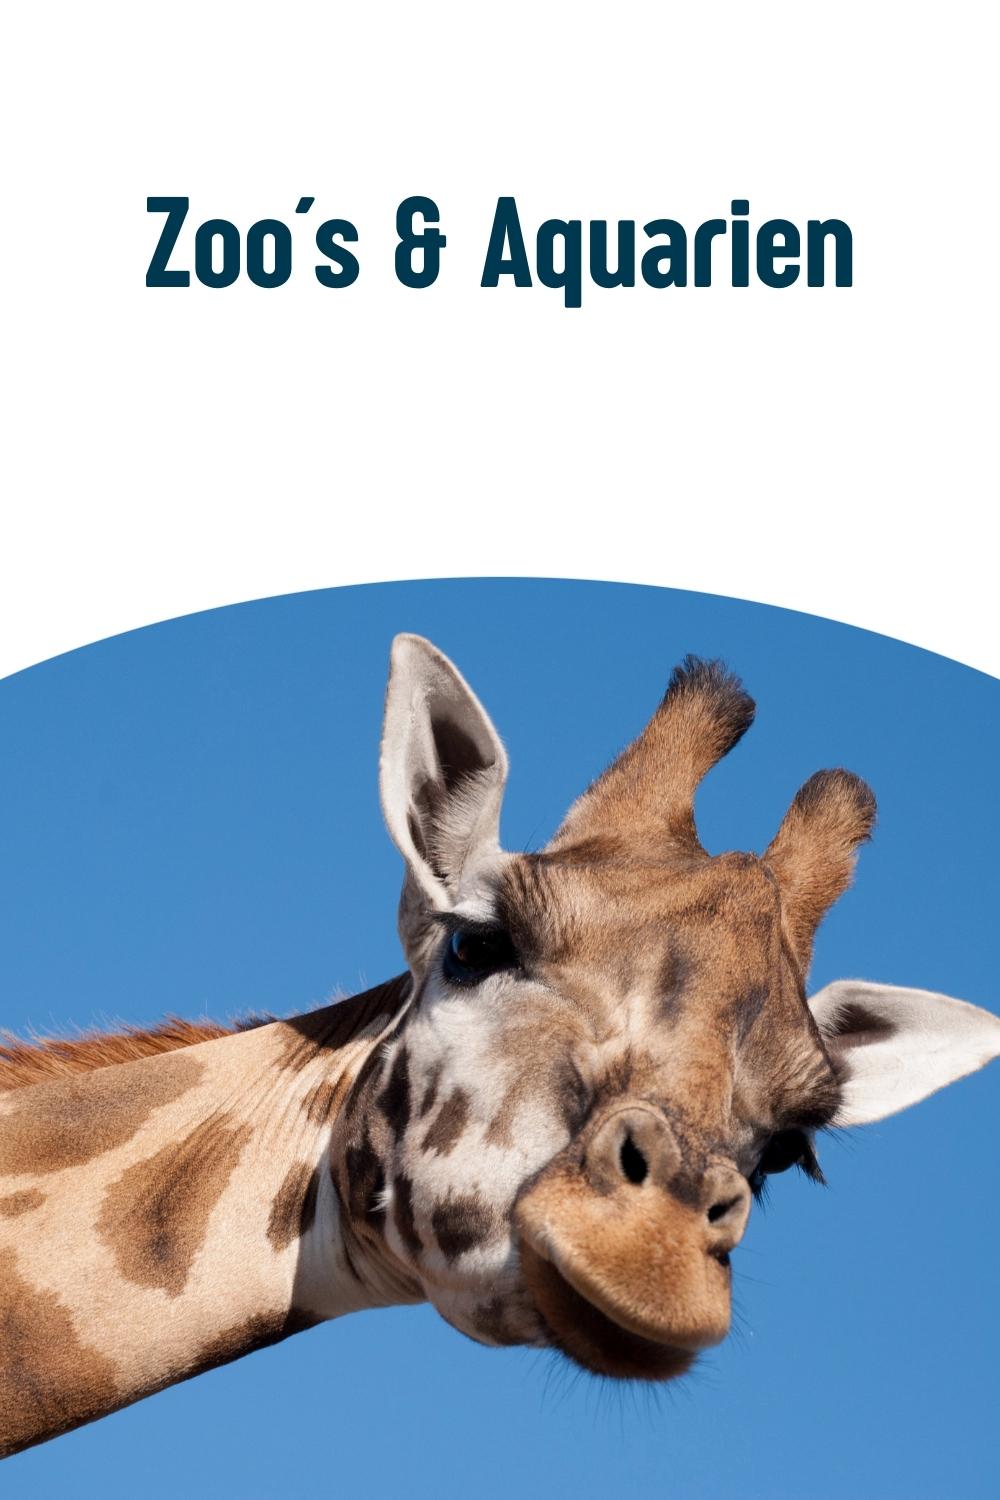 Zoos & Aquarien